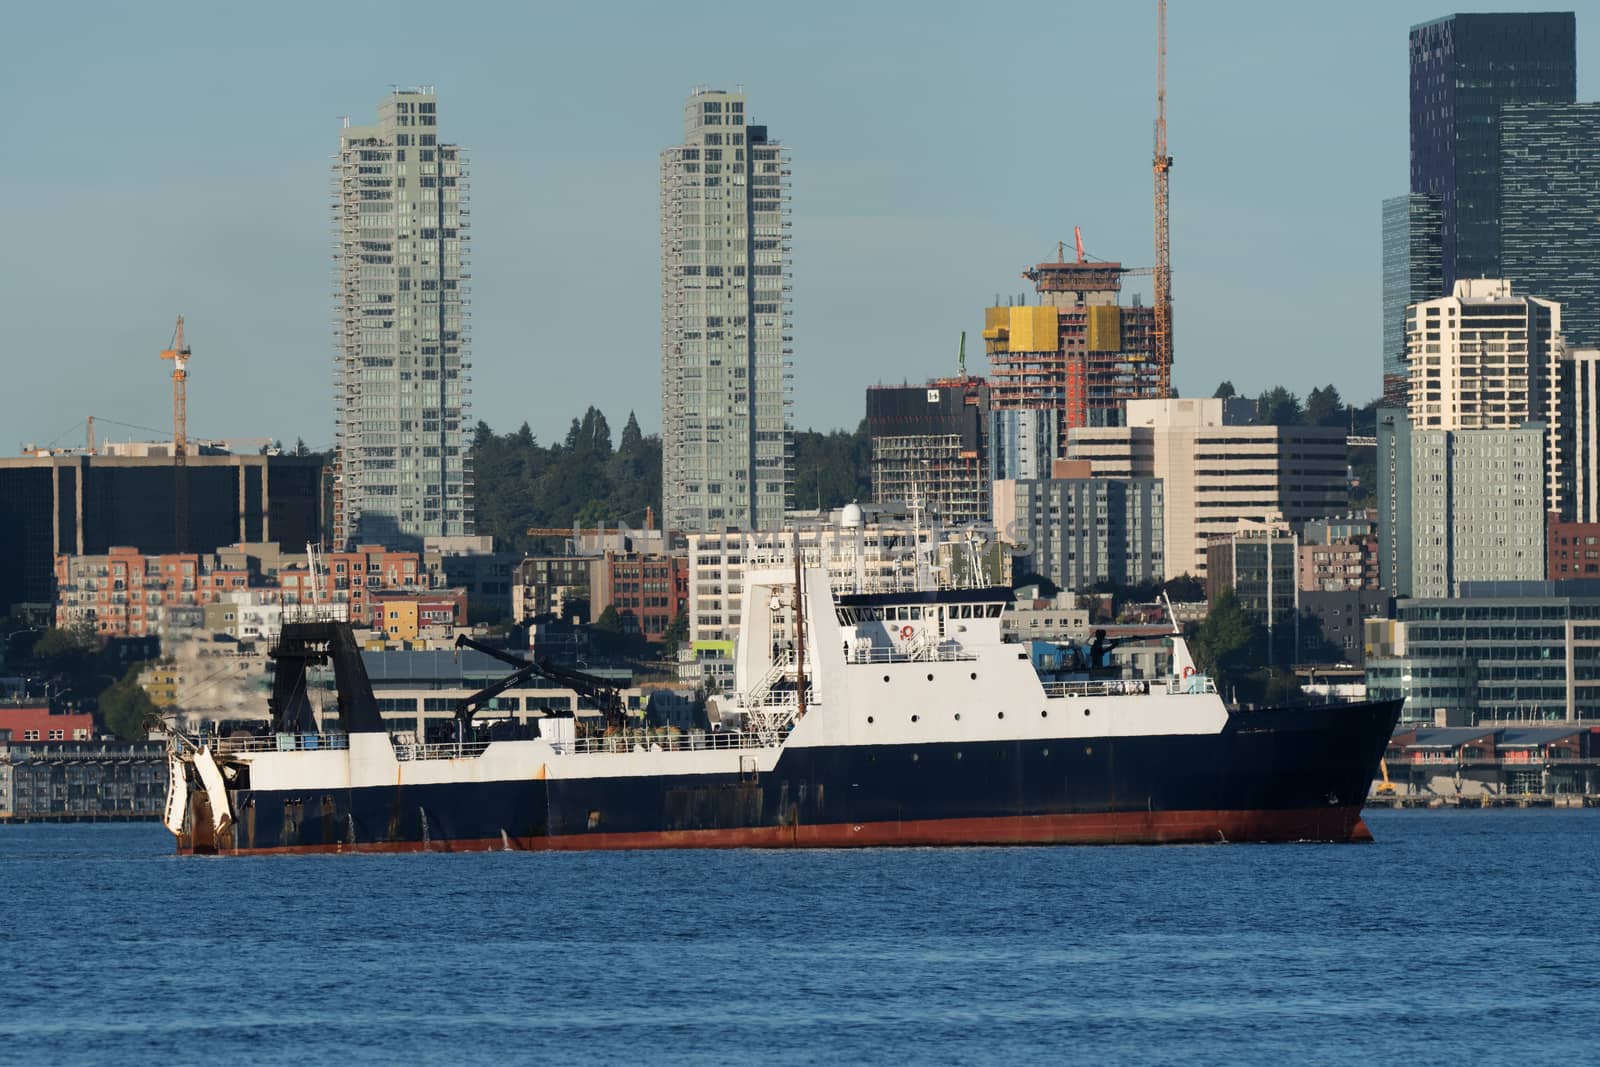 Factory trawler returning to Seattle from fishing trip